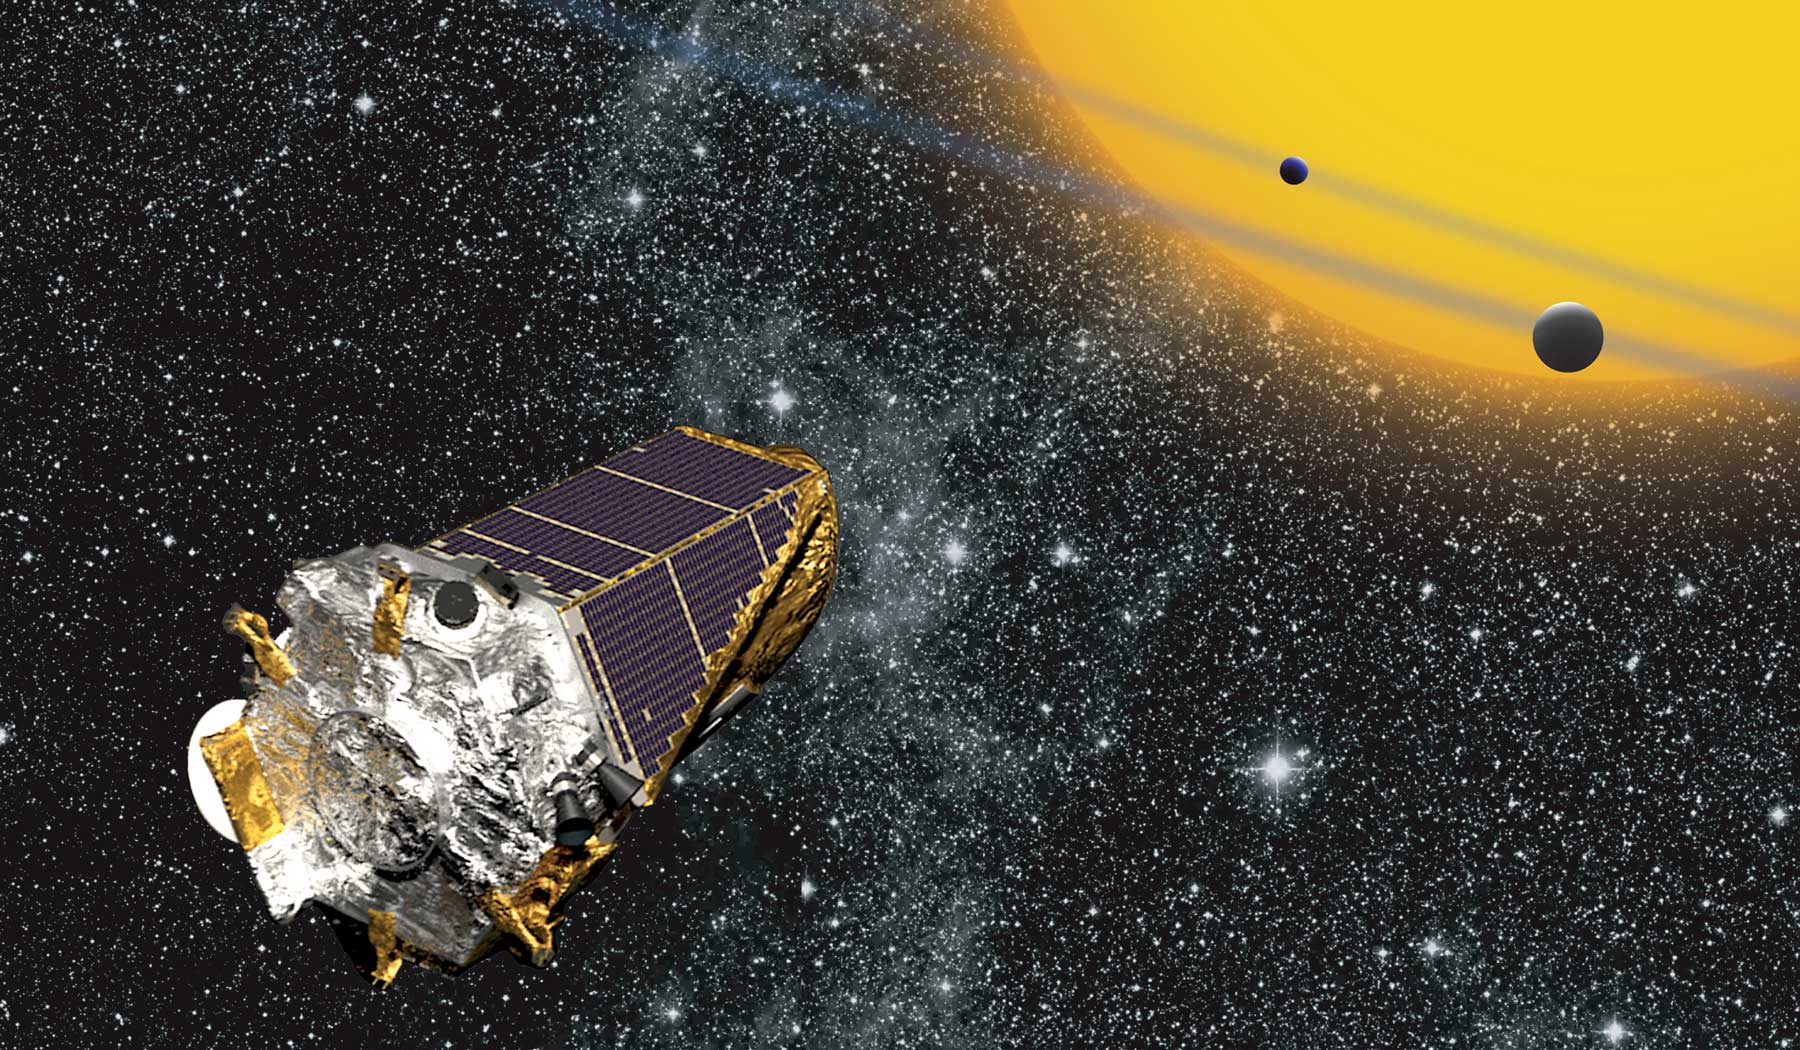 Art: NASA's Kepler mission